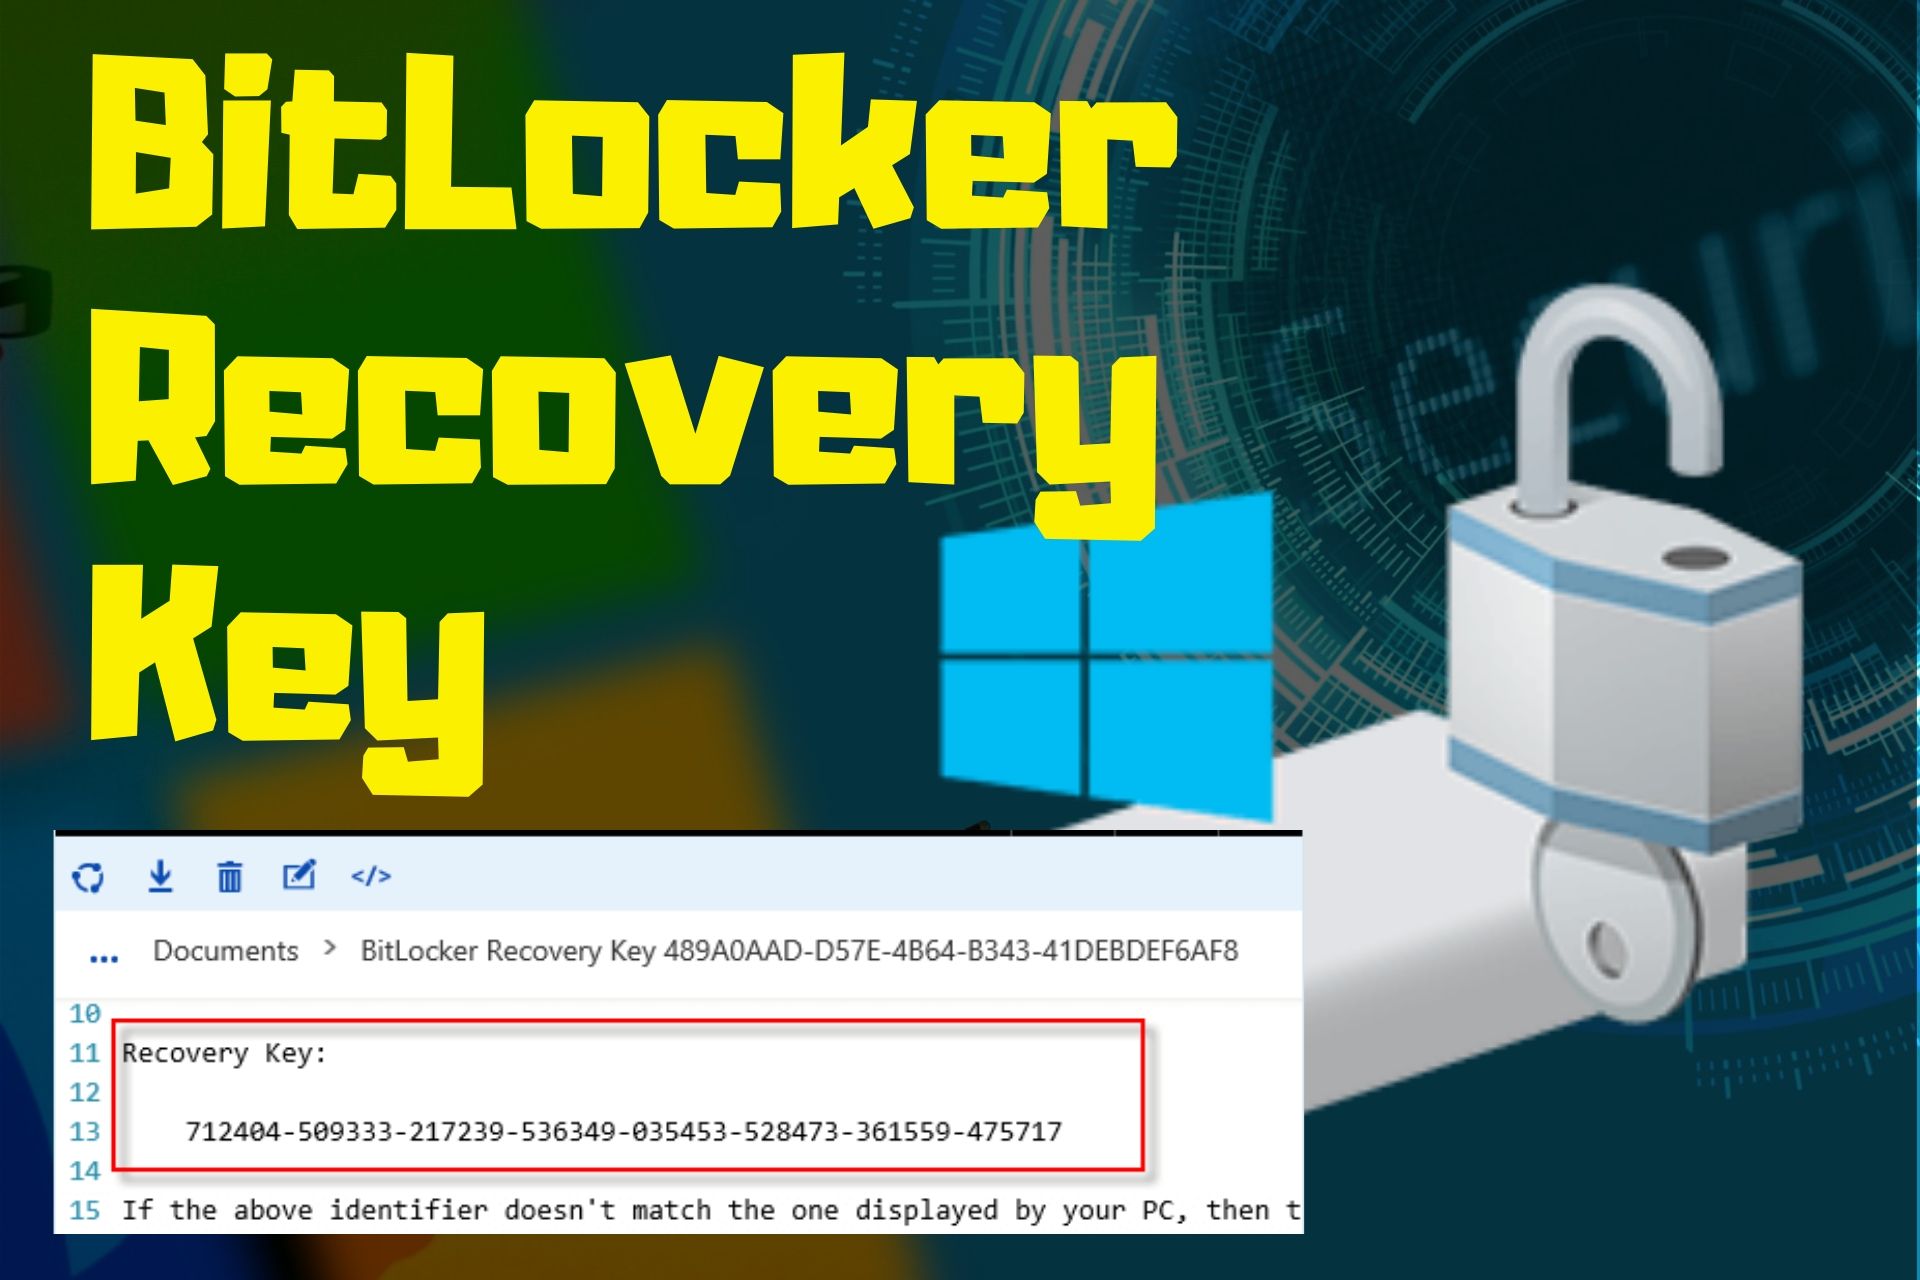 bitlocker drive encryption windows 8.1 free download